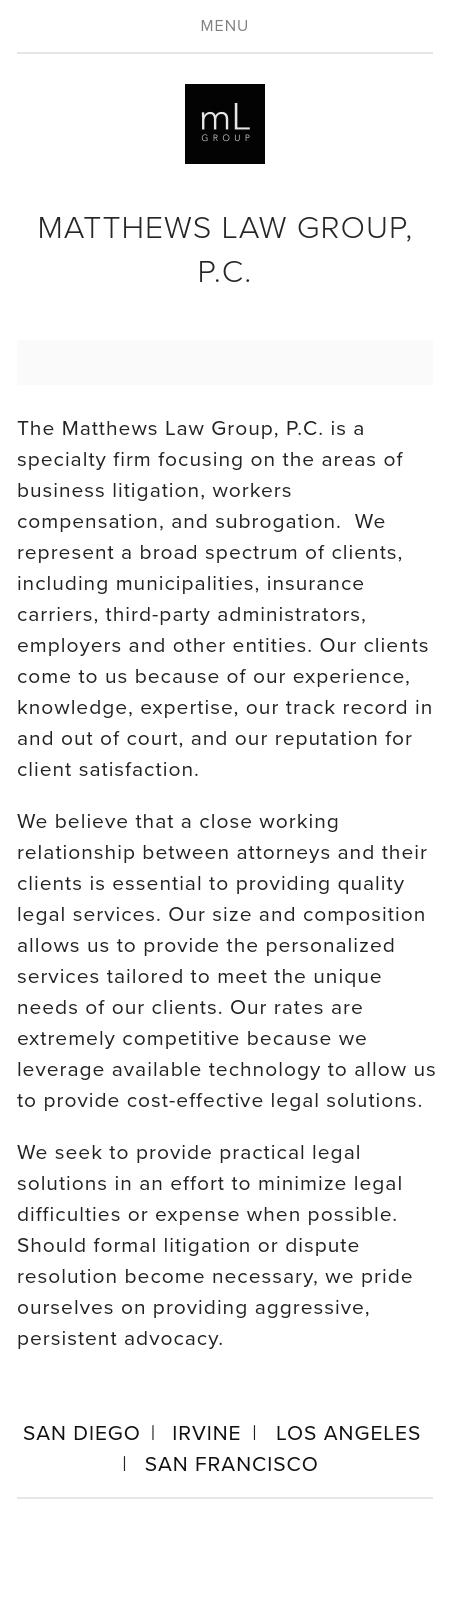 Matthews Law Group, P.C. - Los Angeles CA Lawyers